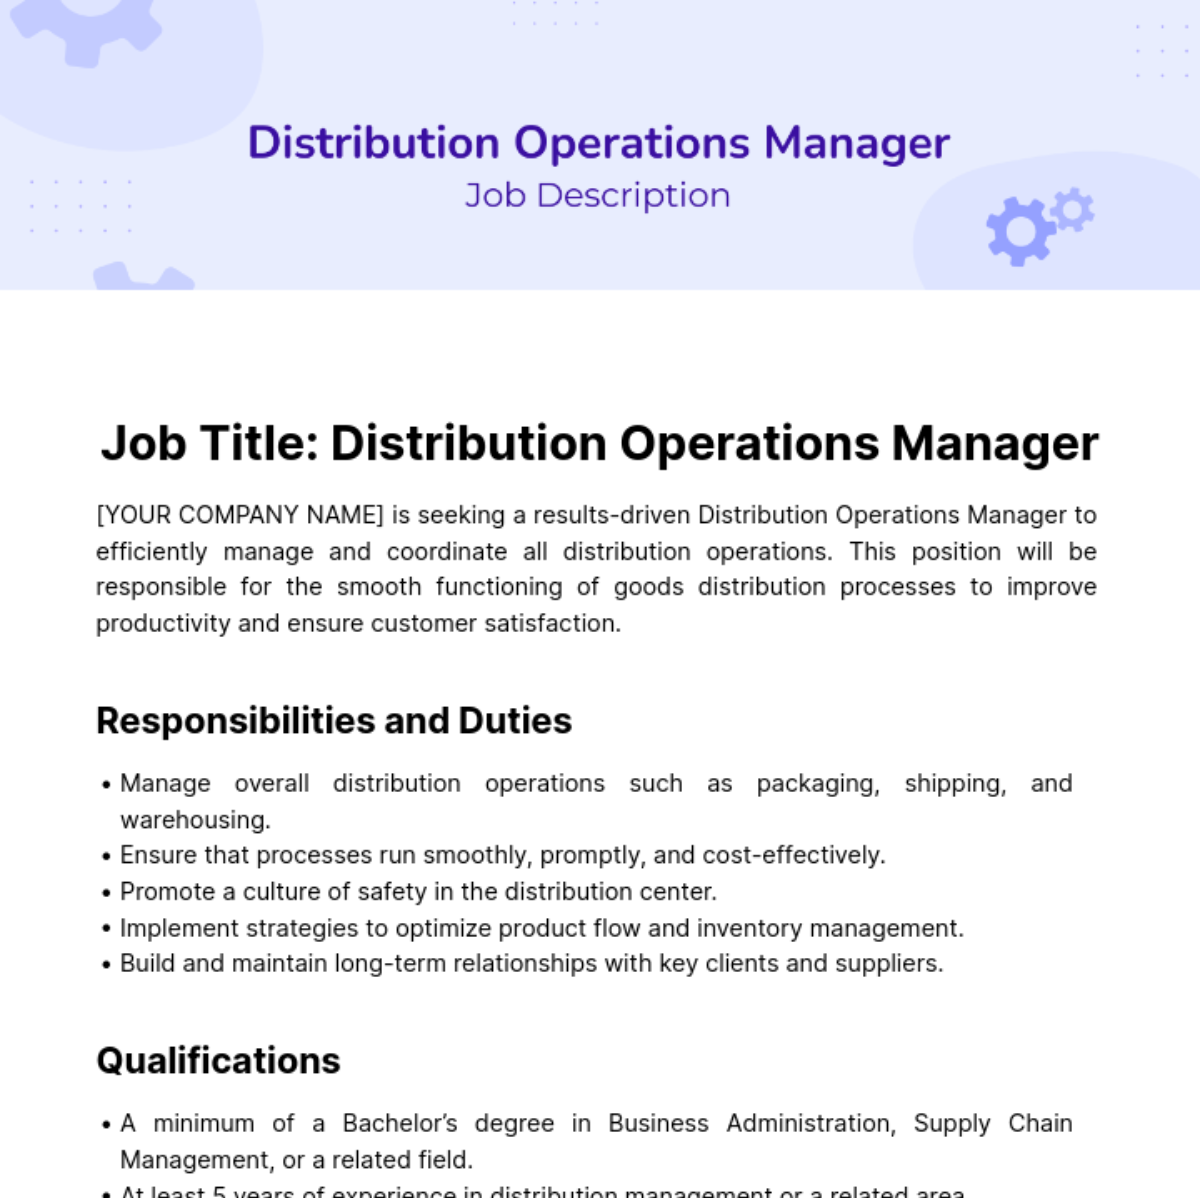 Distribution Operations Manager Job Job Description Template